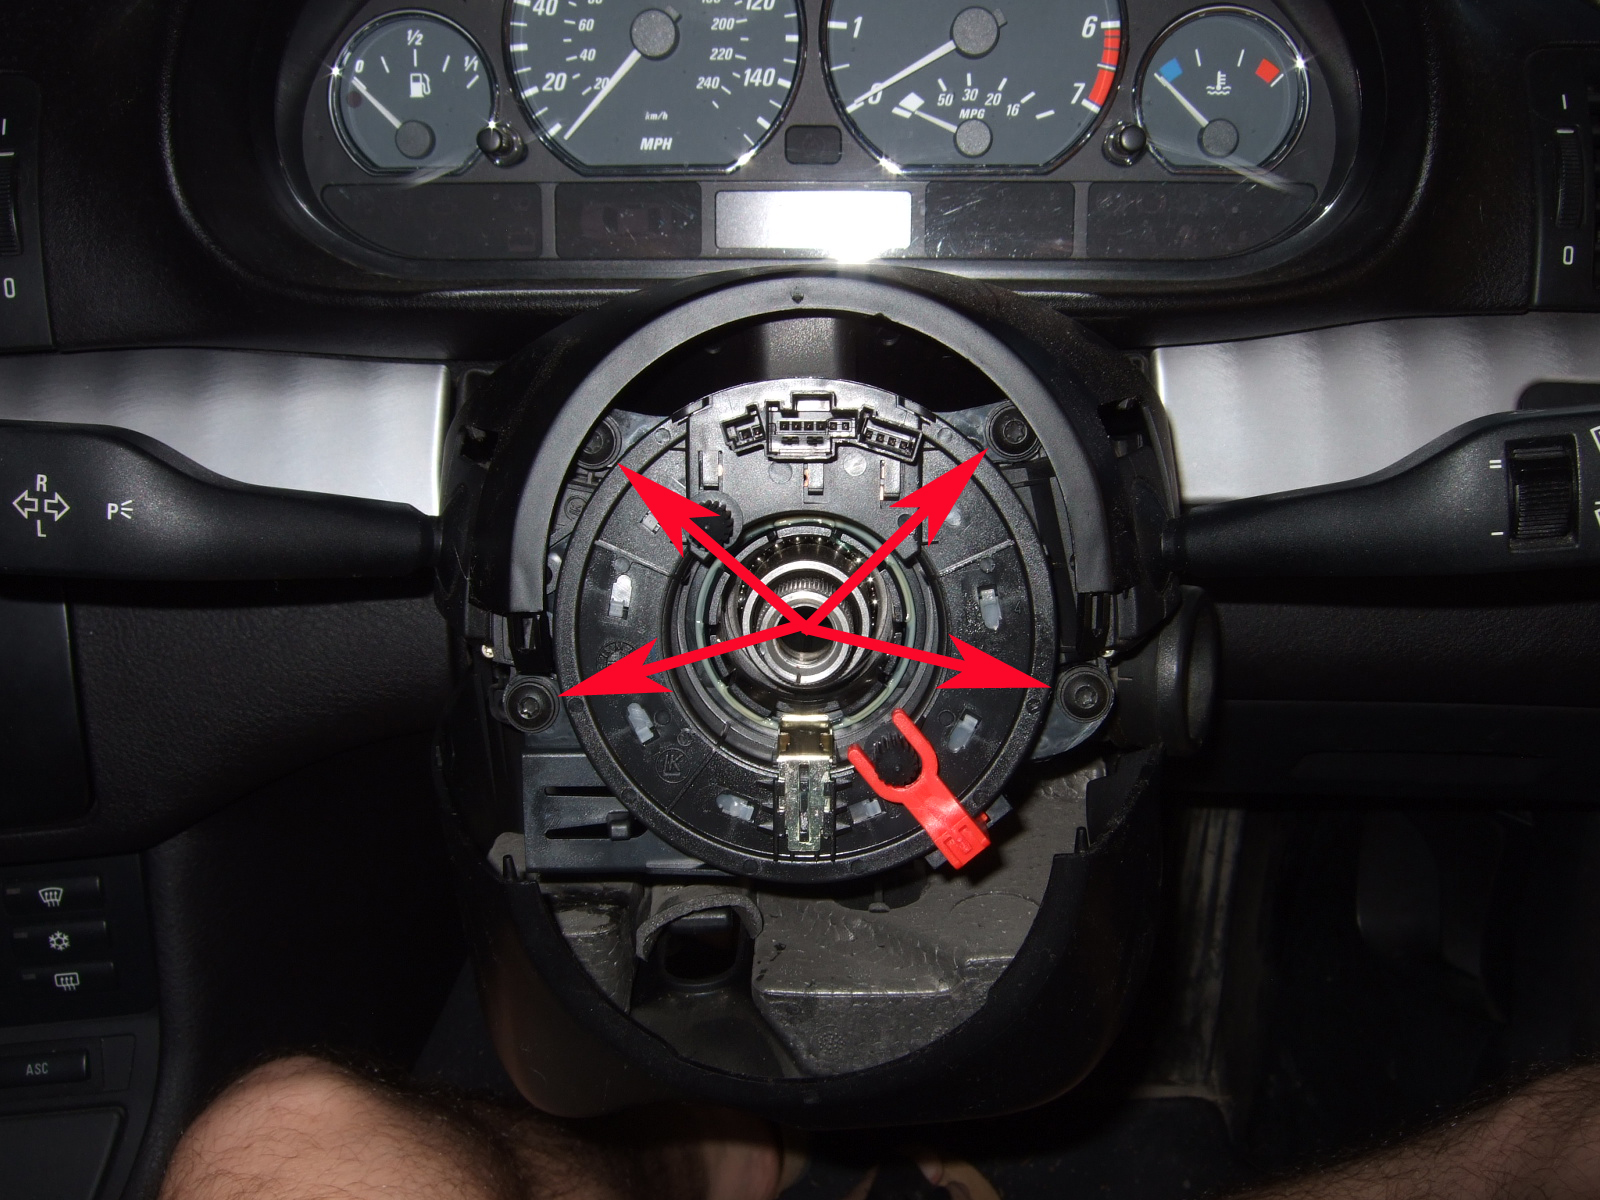 Bmw steering wheel lock indicator #5